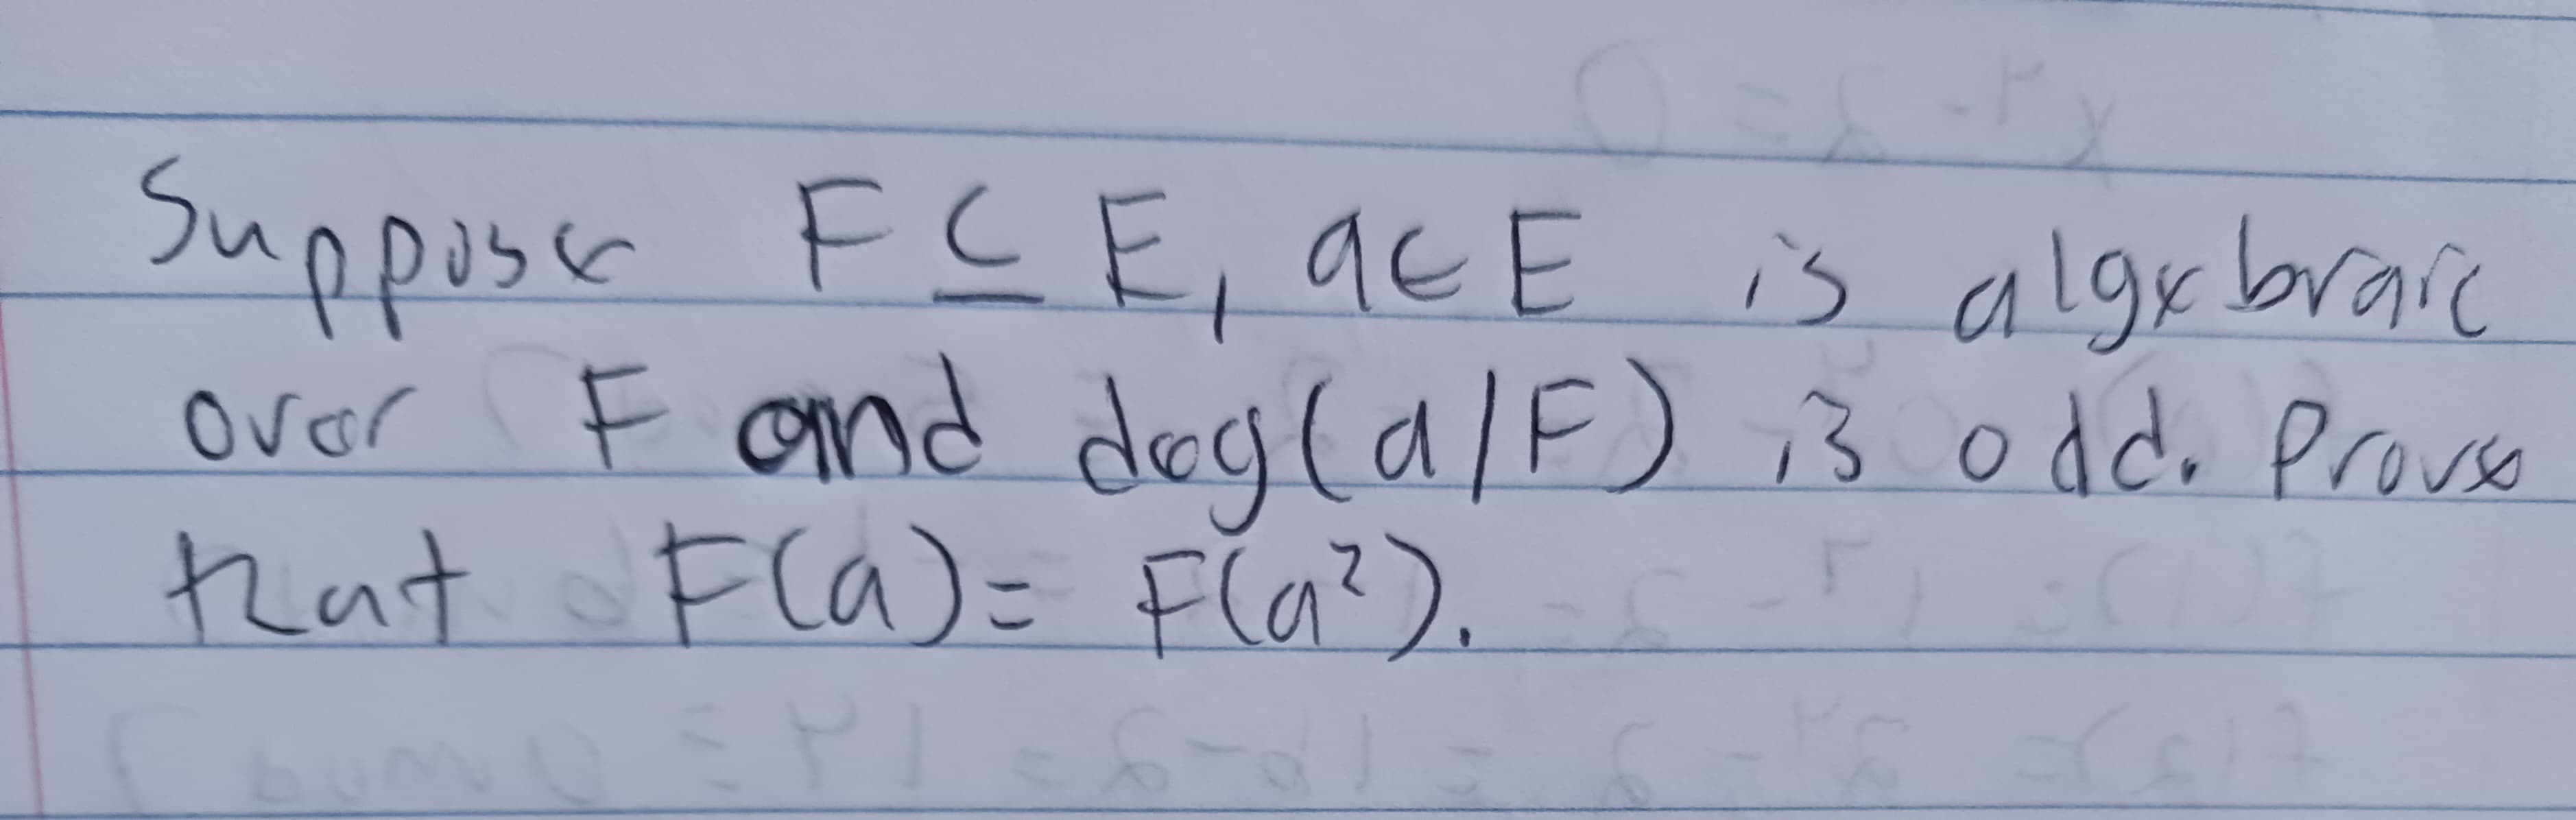 Supposer FCE, acE is algebraic
F and dog (a/F) 13 odd. Proveo
that F(a)= F(a²).
ovor